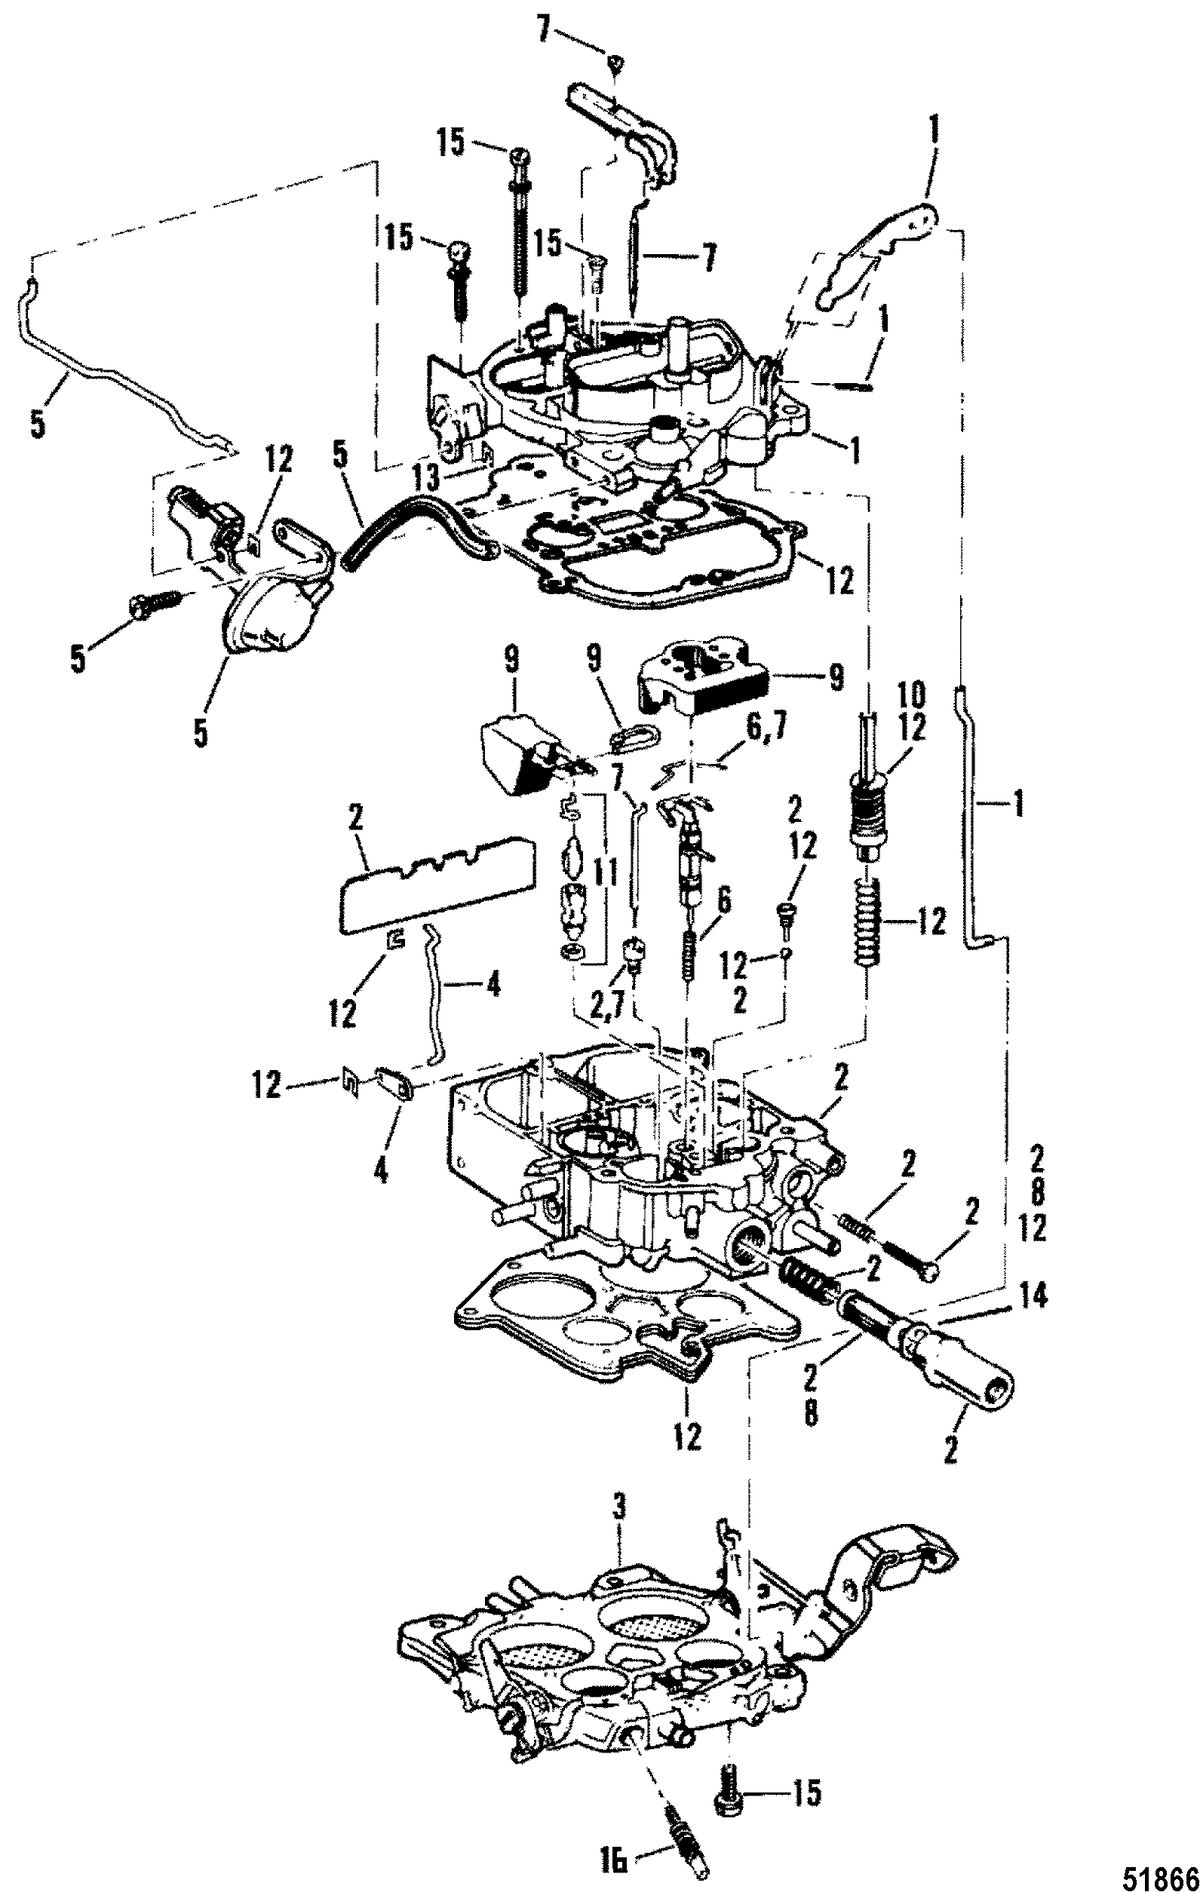 MERCRUISER 5.7L COMPETITION SKI ENGINE Carburetor(ROCHESTER)